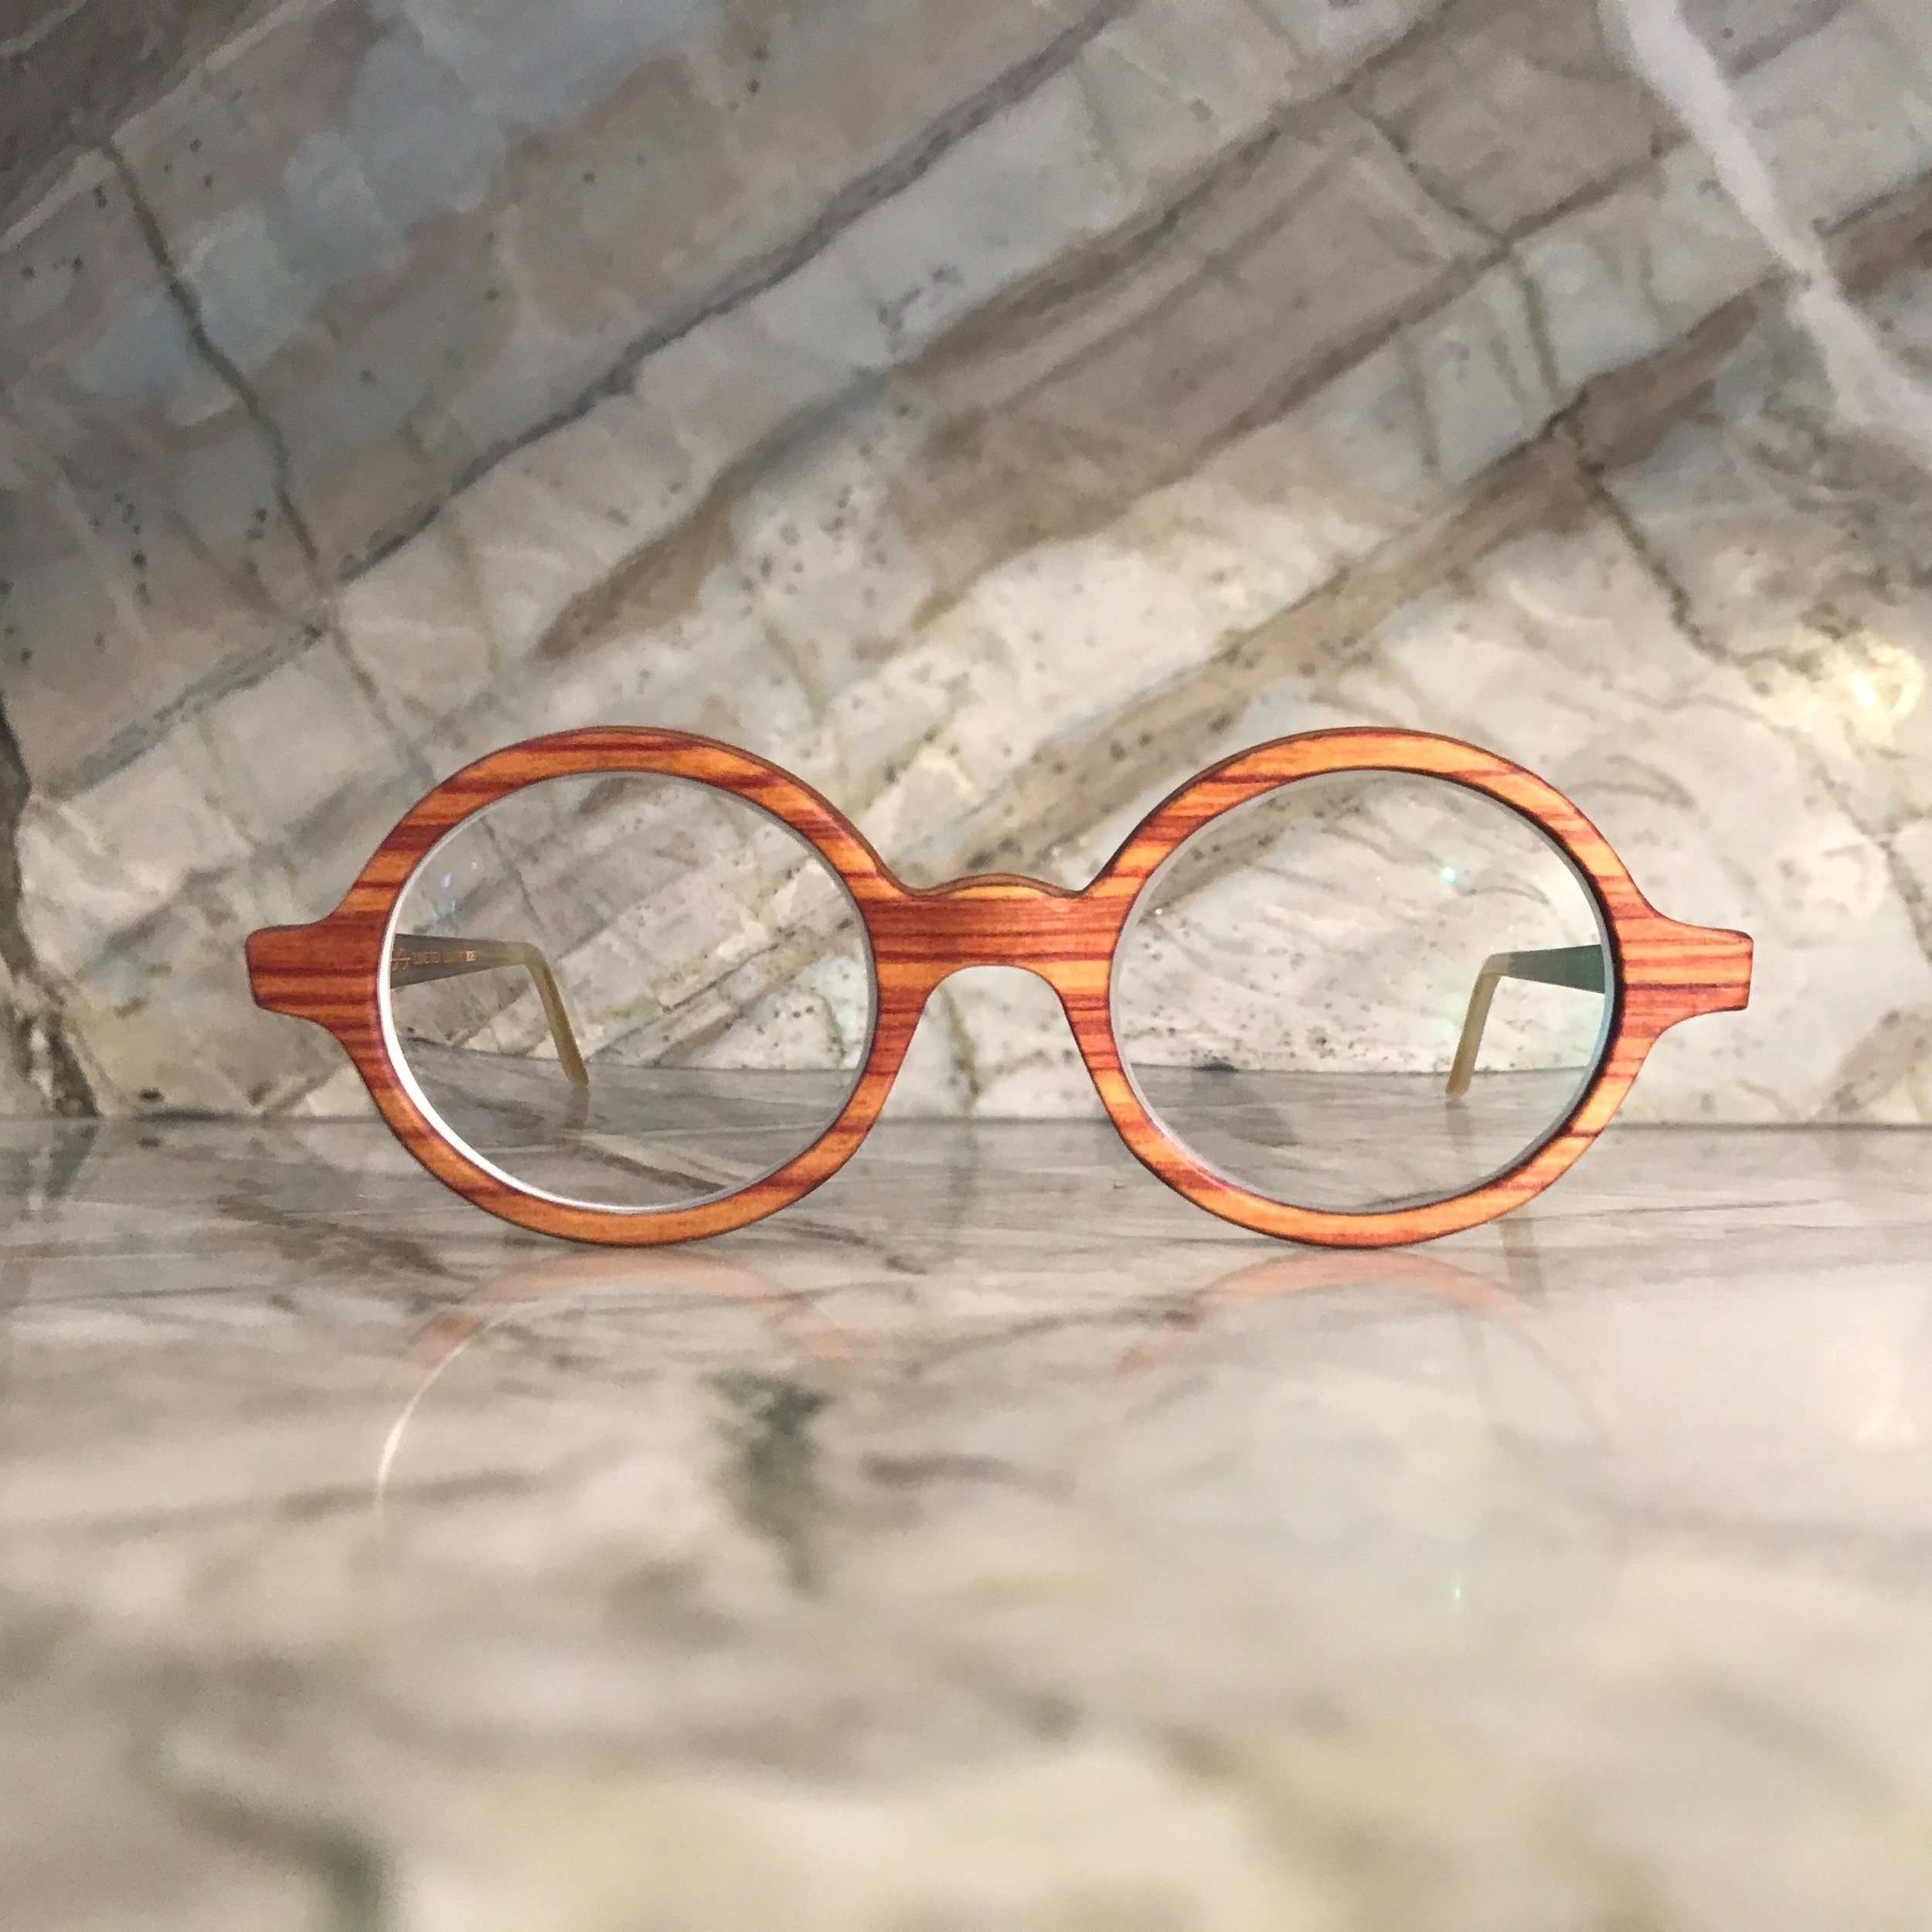 Wooden glasses